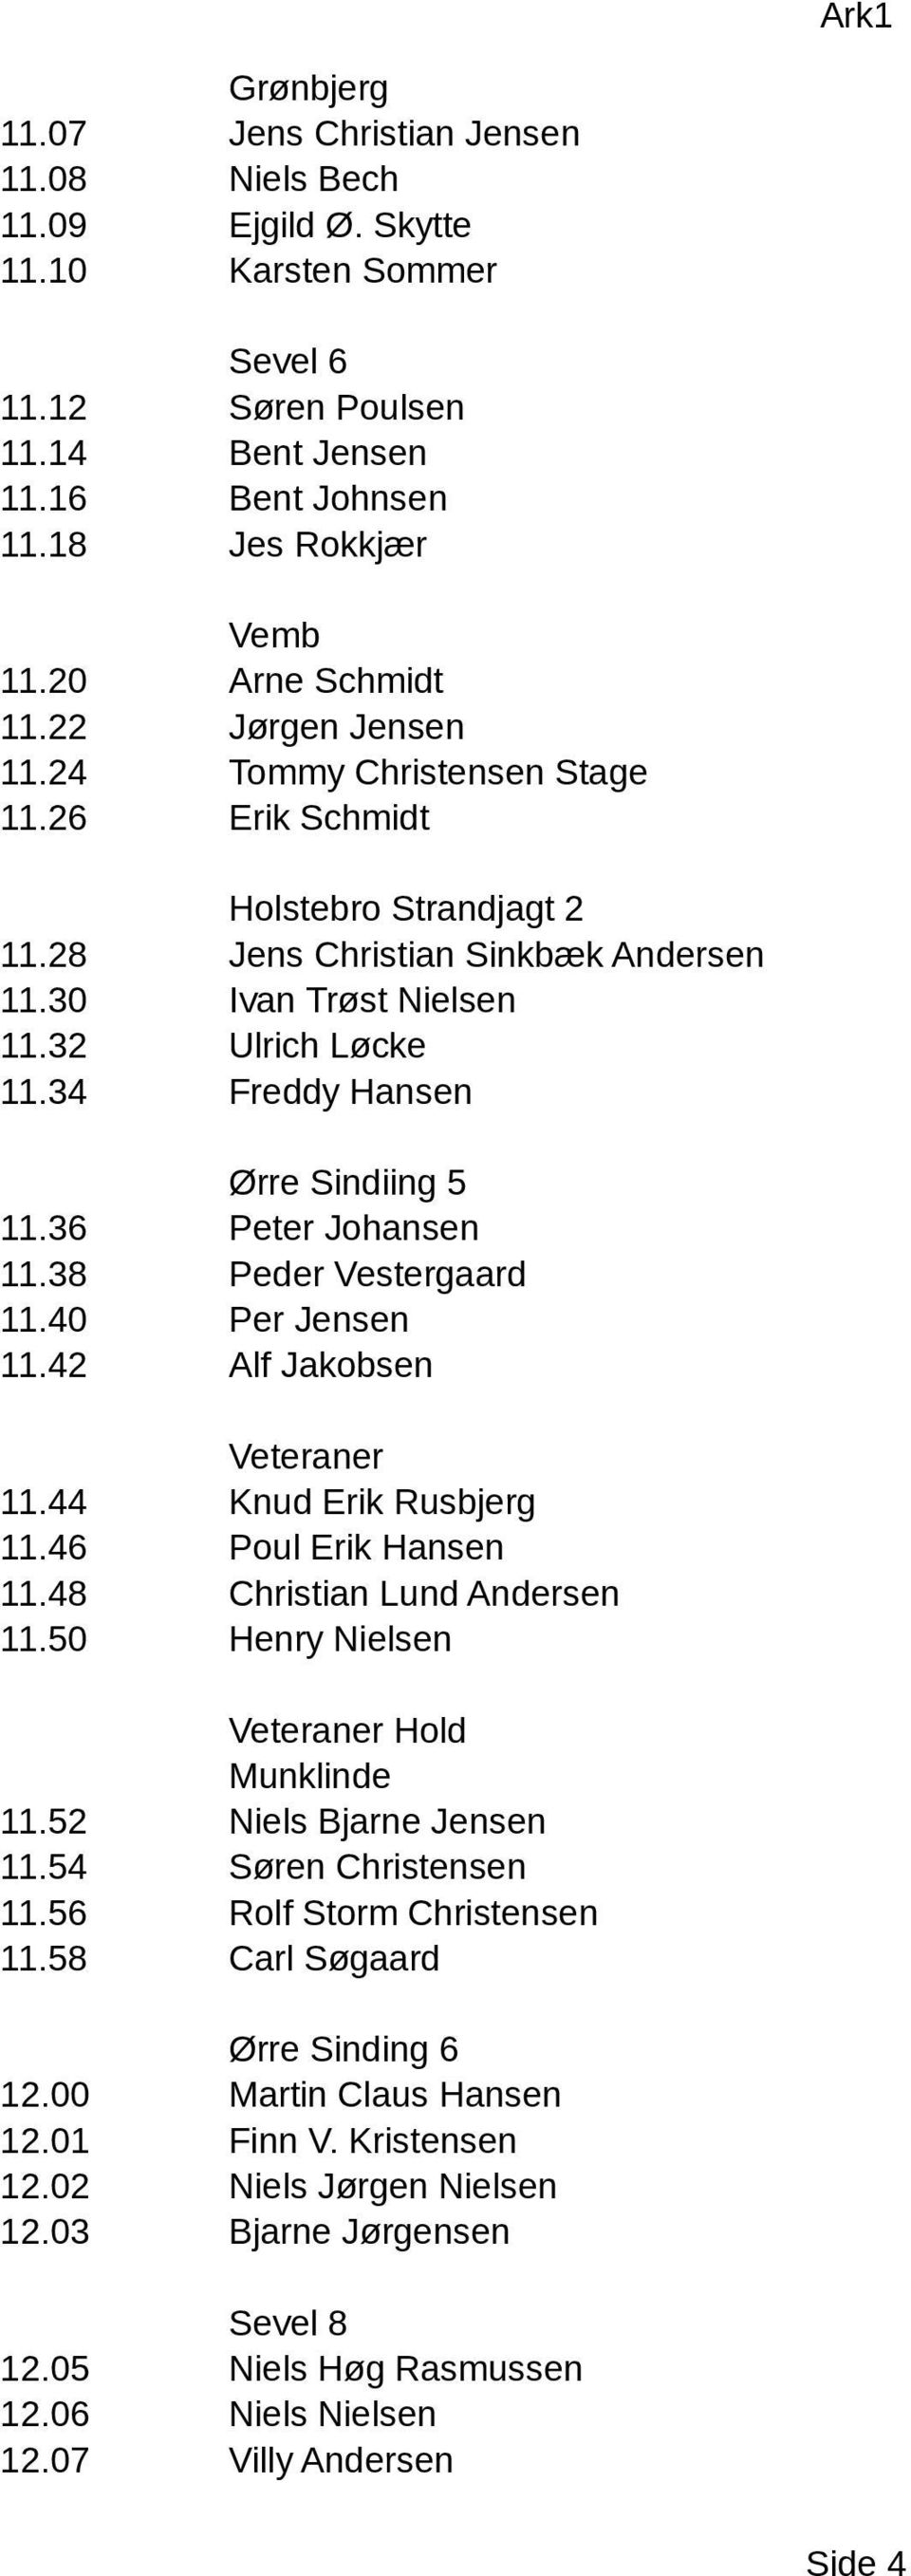 34 Freddy Hansen Ørre Sindiing 5 11.36 Peter Johansen 11.38 Peder Vestergaard 11.40 Per Jensen 11.42 Alf Jakobsen Veteraner 11.44 Knud Erik Rusbjerg 11.46 Poul Erik Hansen 11.